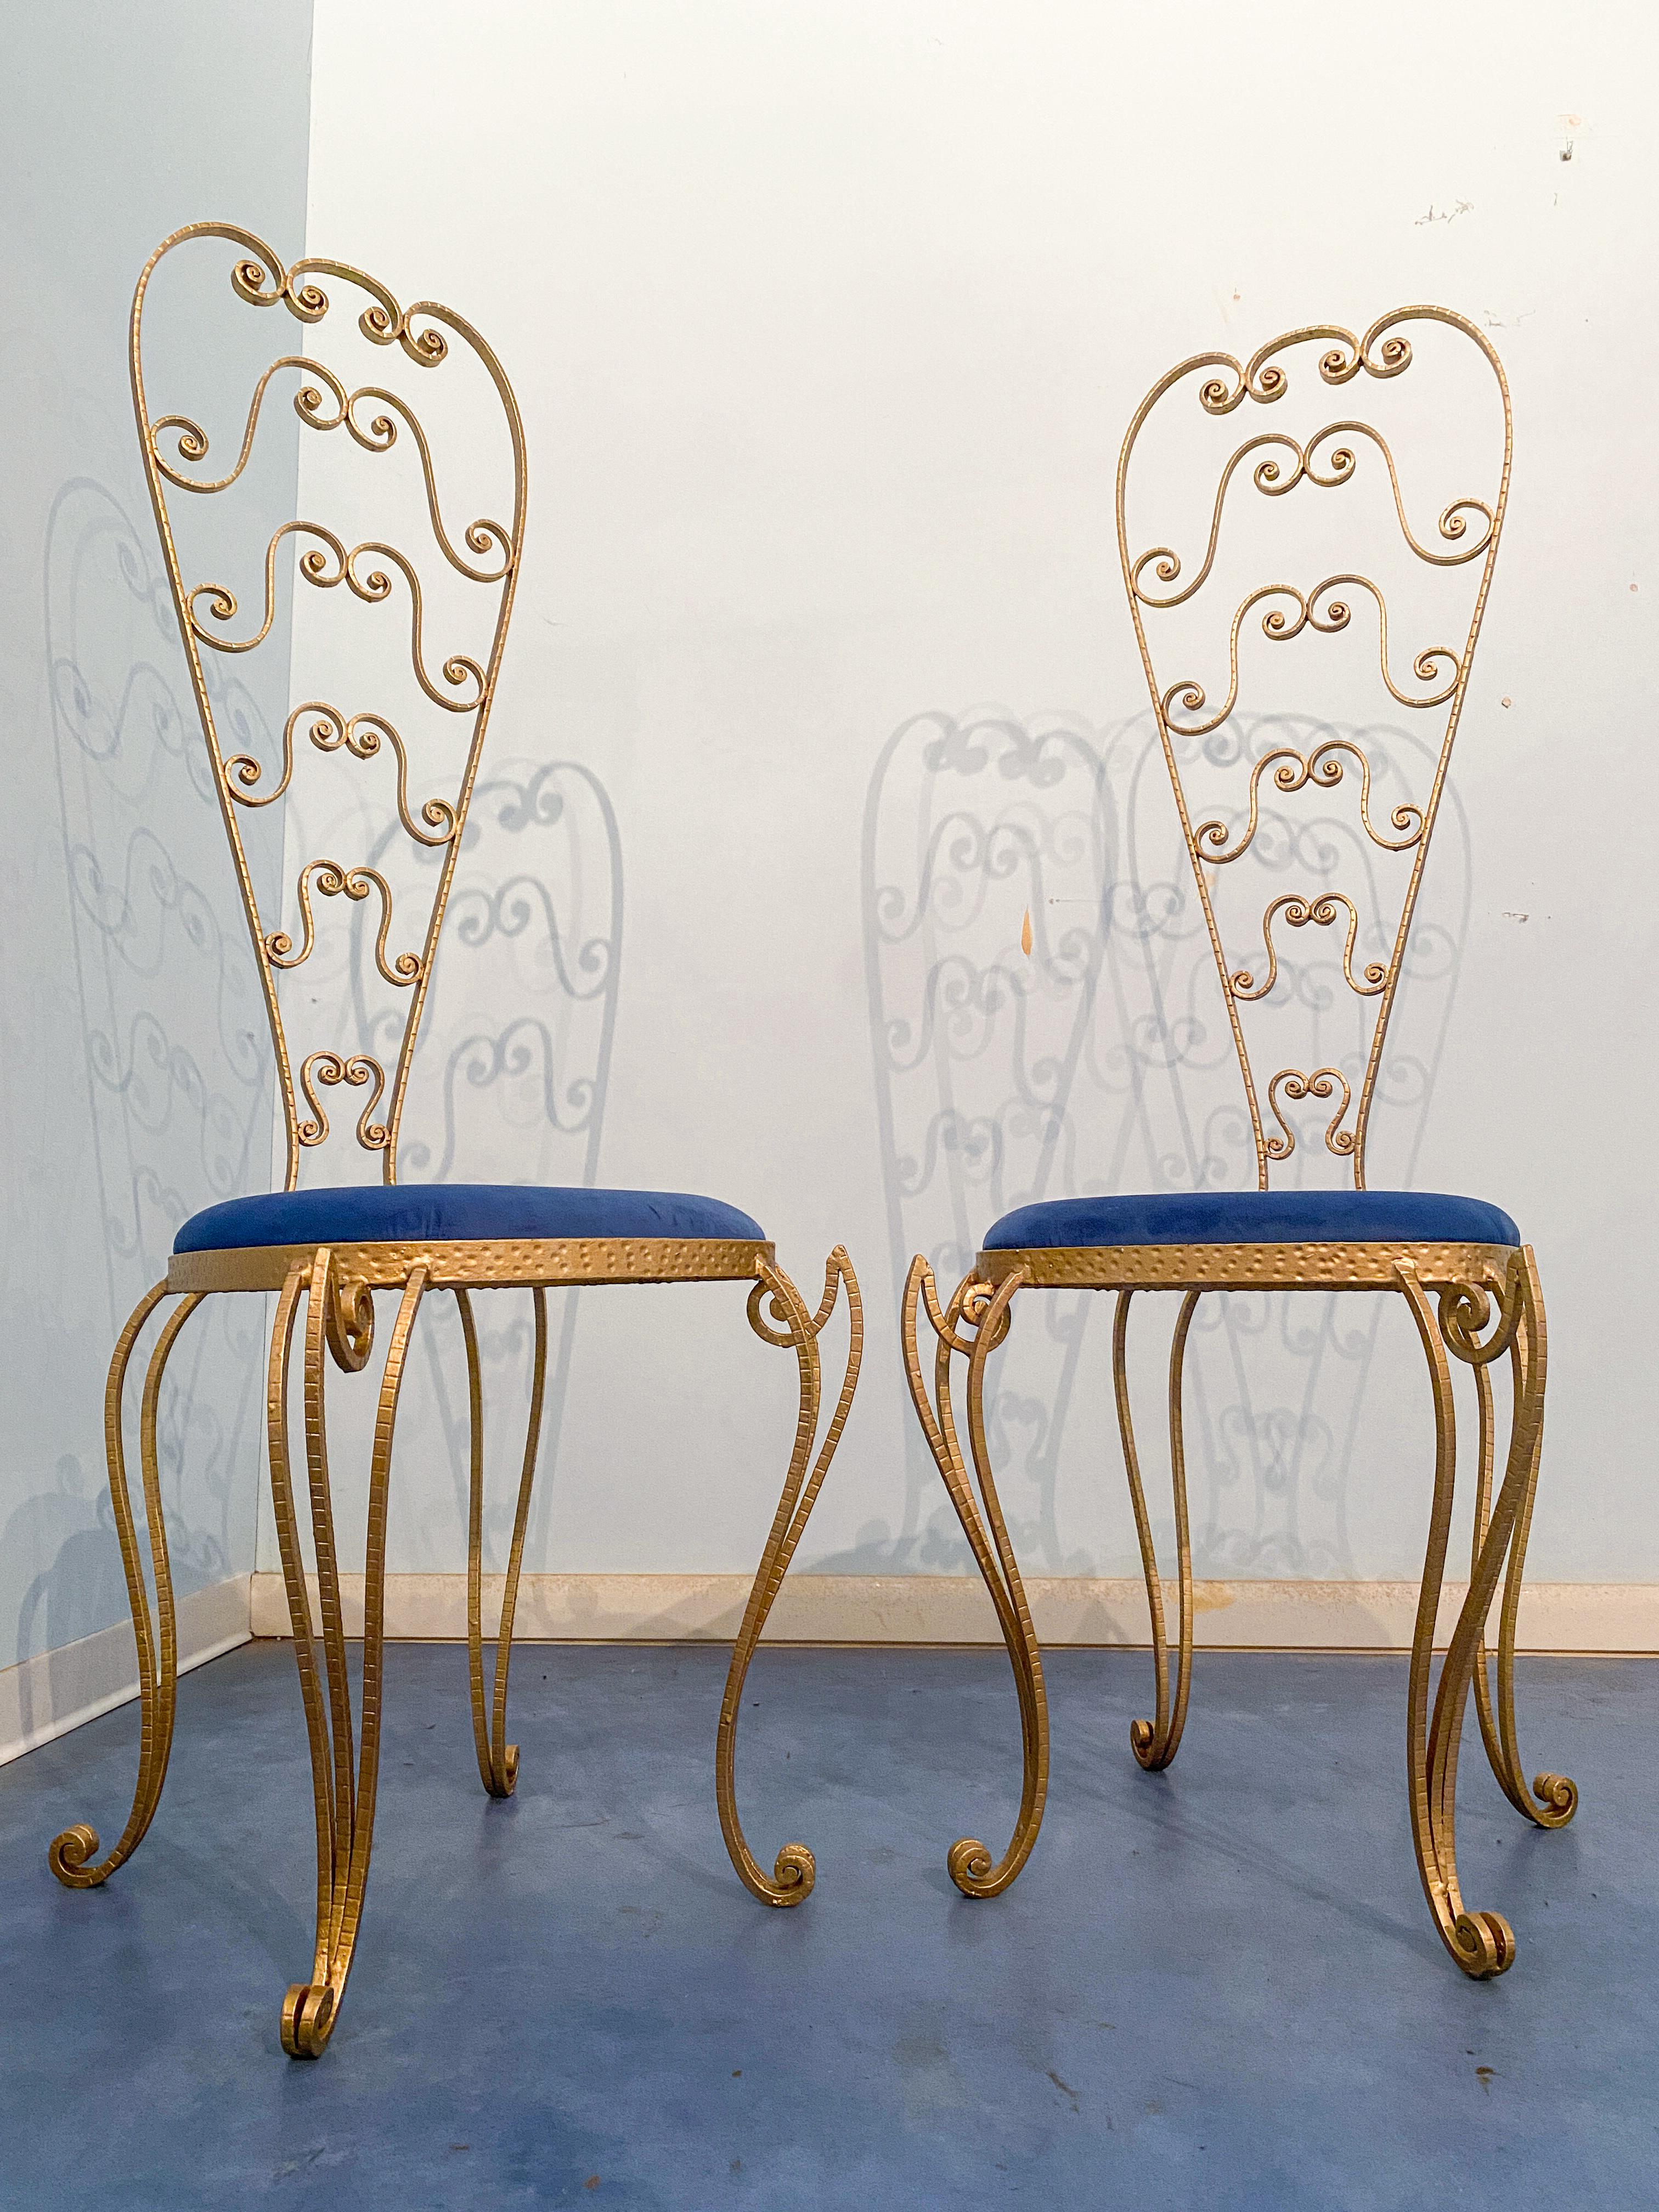 Pair of Italian Mid-Century Modern Luigi Colli Gold Iron Vanity Chairs, 1950s For Sale 7